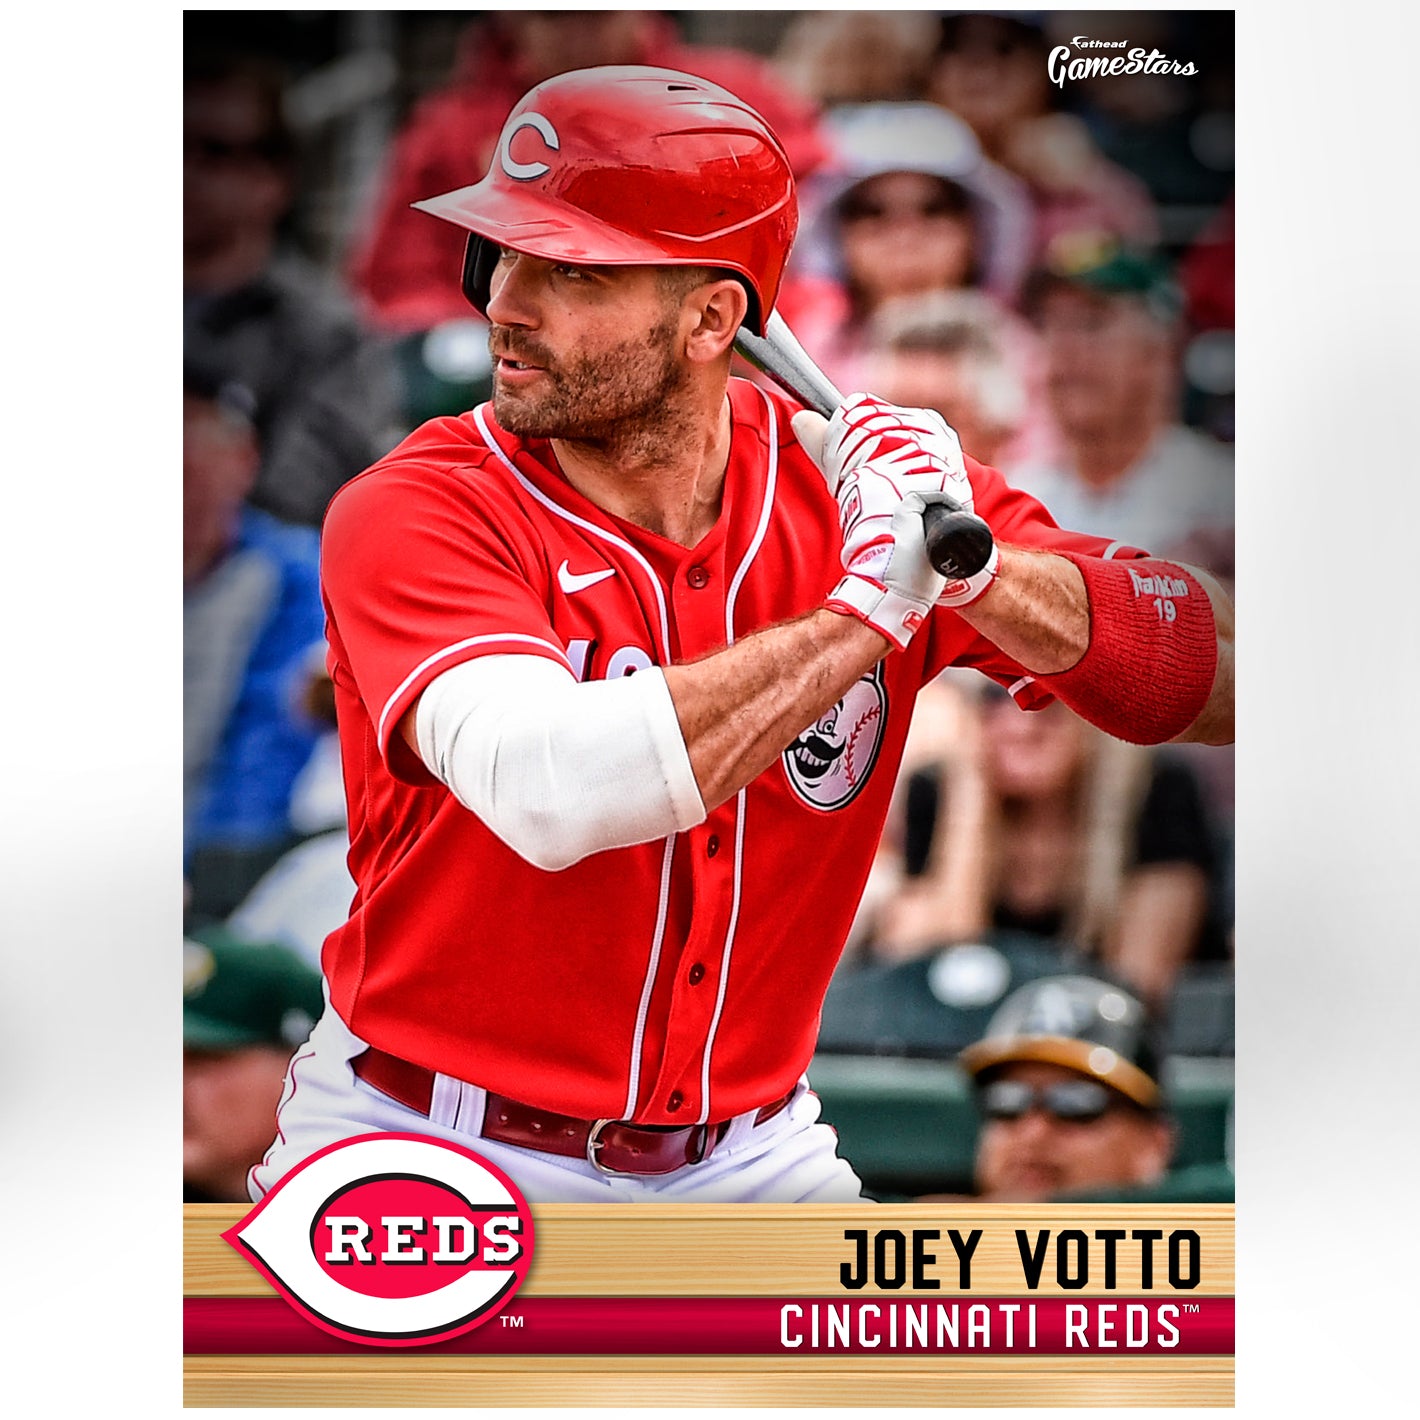 Joey Votto Bio Information - MLB